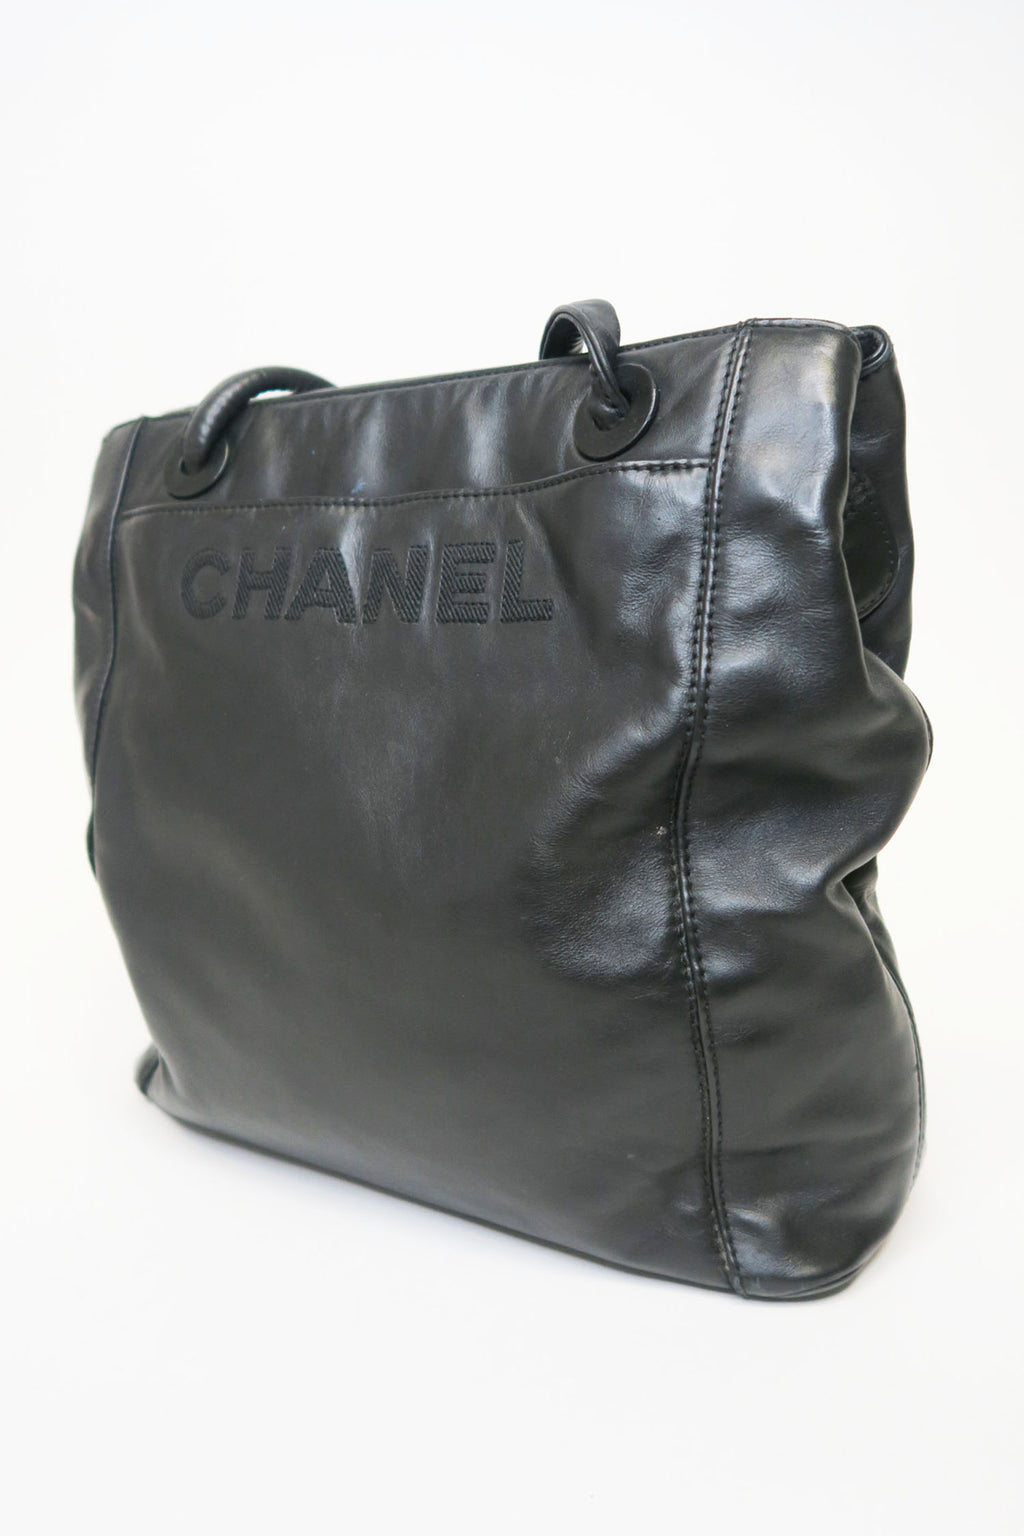 Chanel Vintage Tote